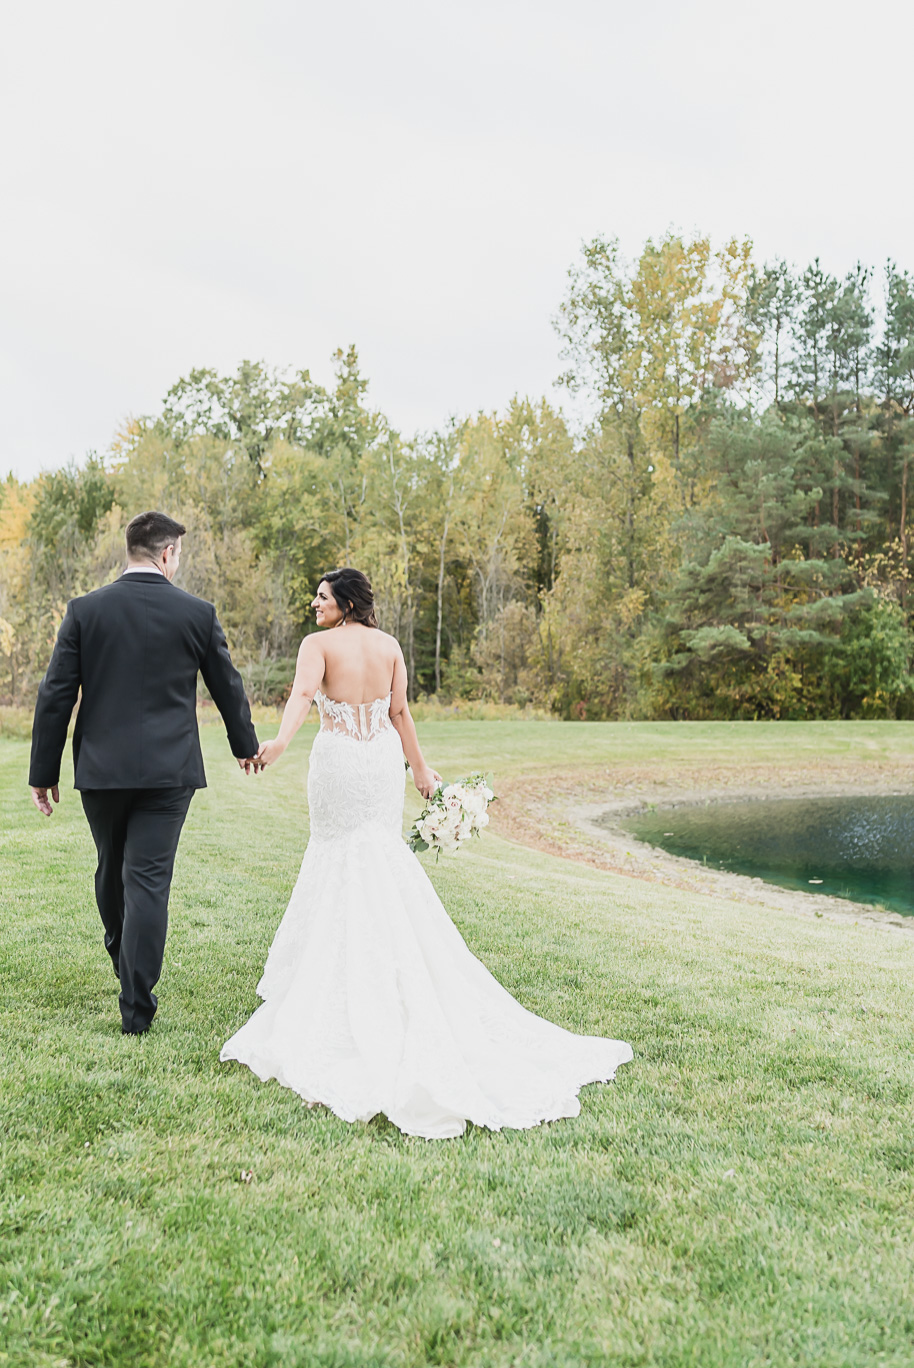 An intimate black tie backyard wedding in Armada Michigan provided by Kari Dawson top rated Southeastern Michigan wedding photographer and her team.